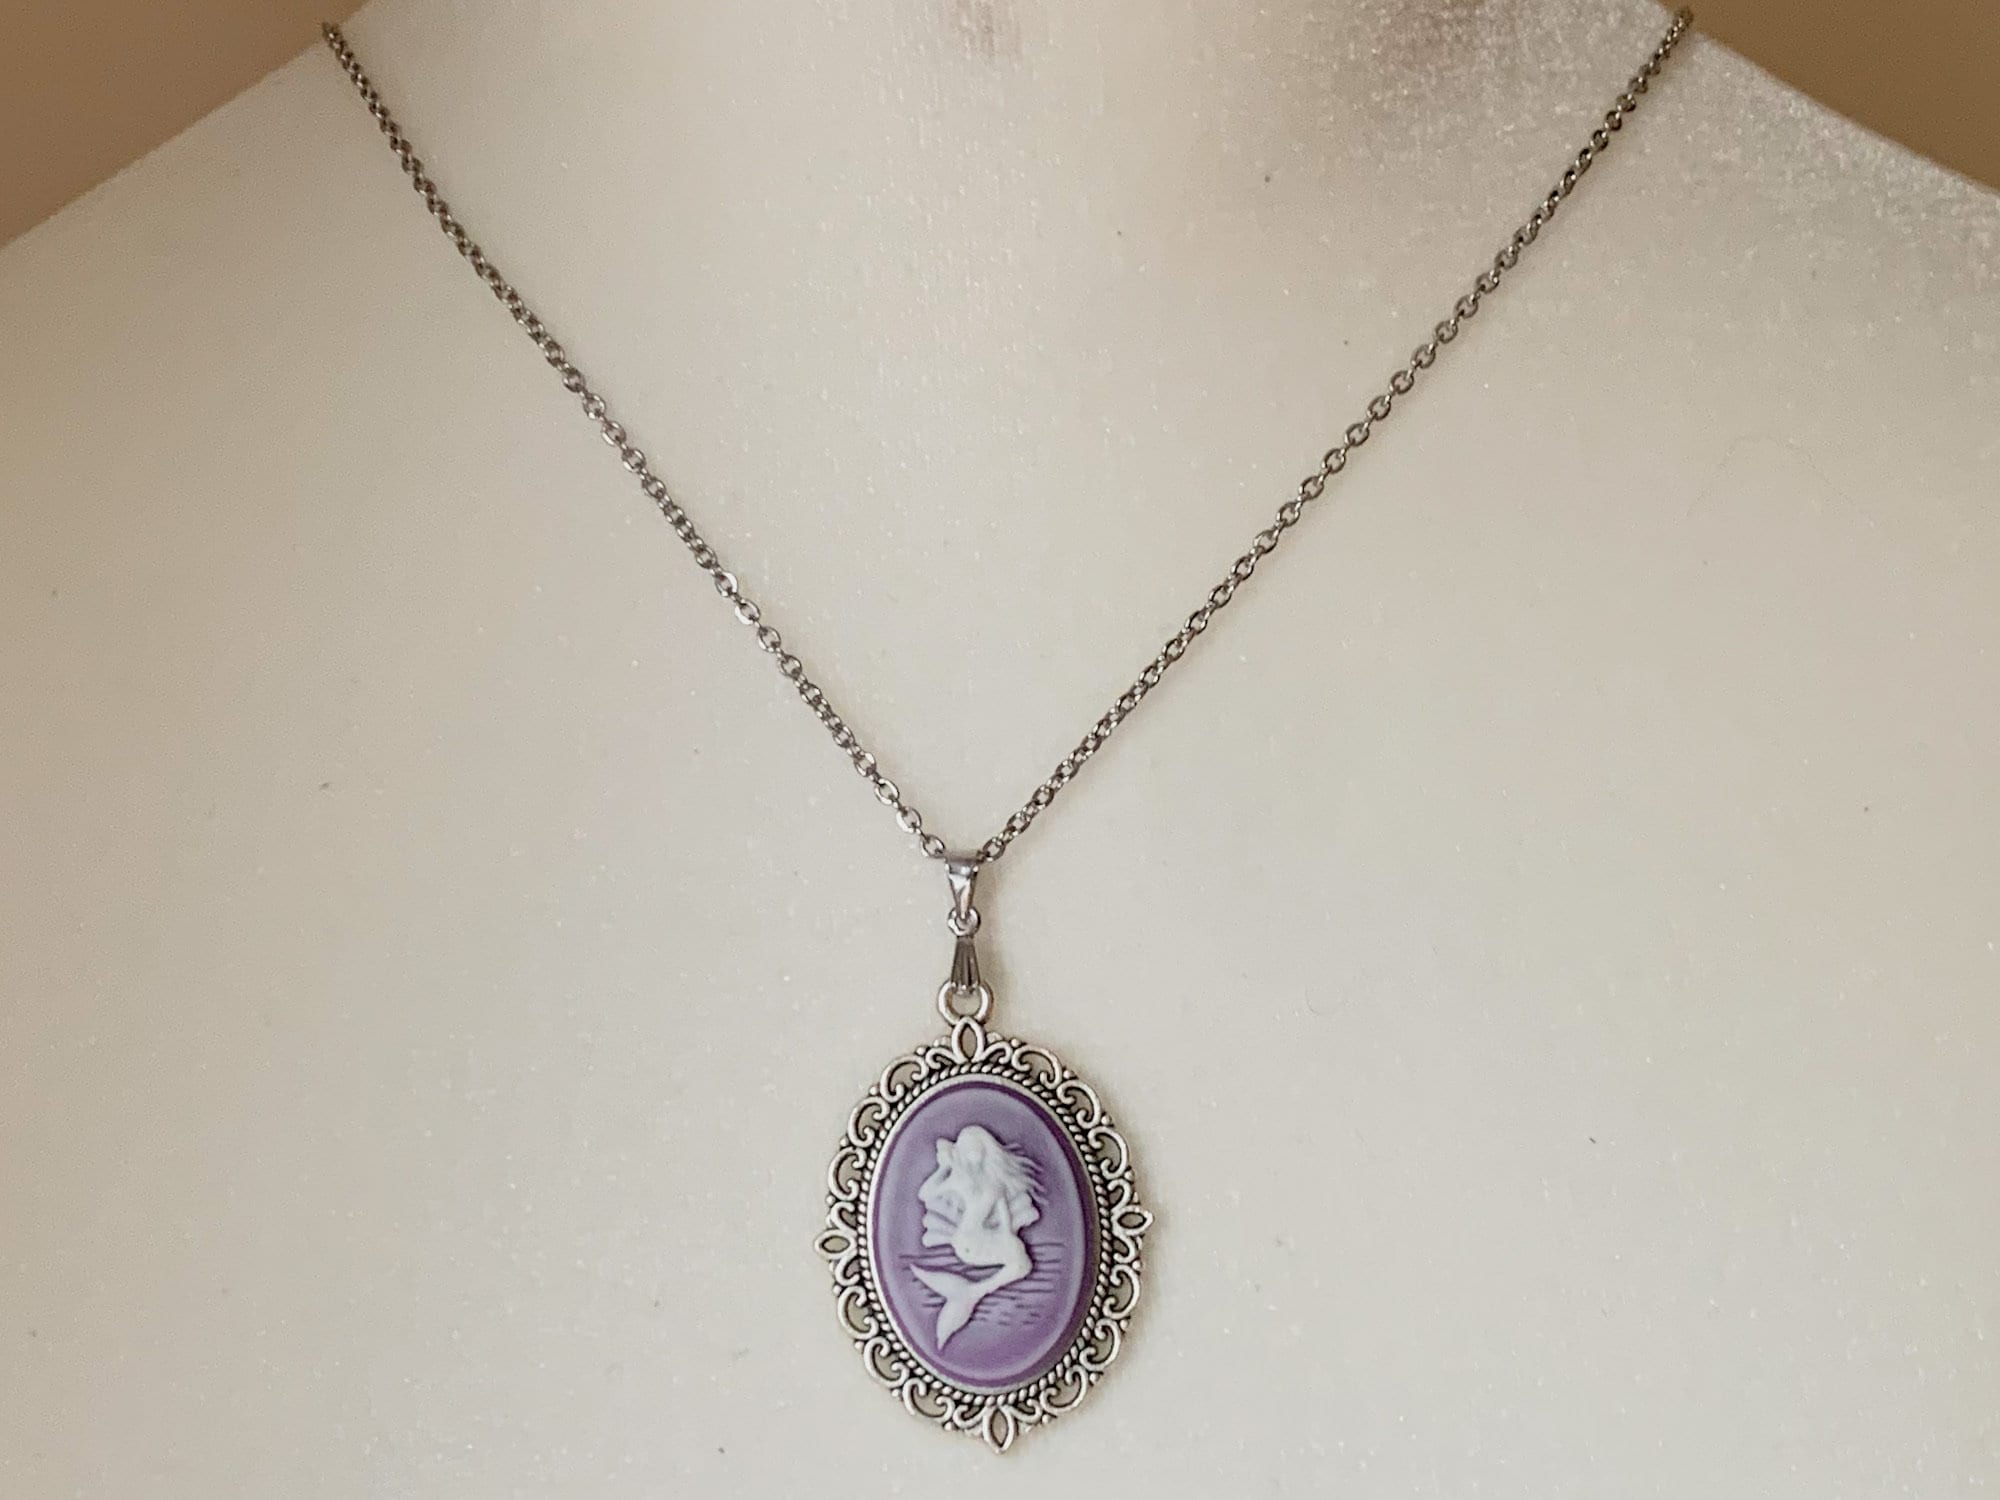 Purple Mermaid Designs Big Slim Monogram Necklace